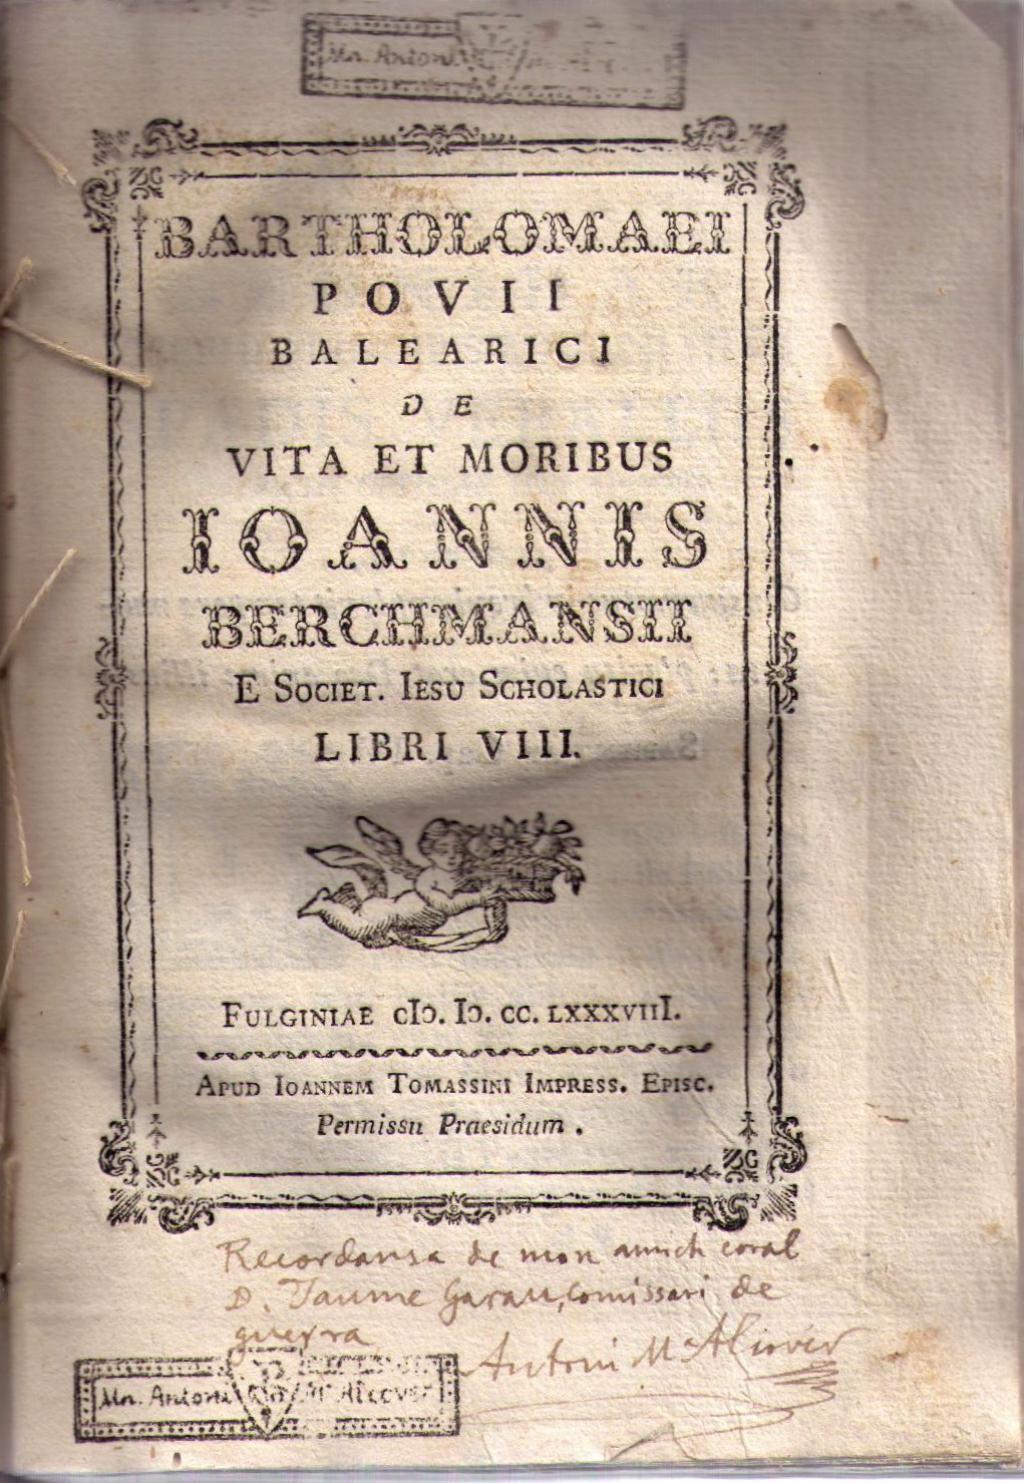 Coberta de De Vita et moribus Joannis Berchmansii (llibri VIII)